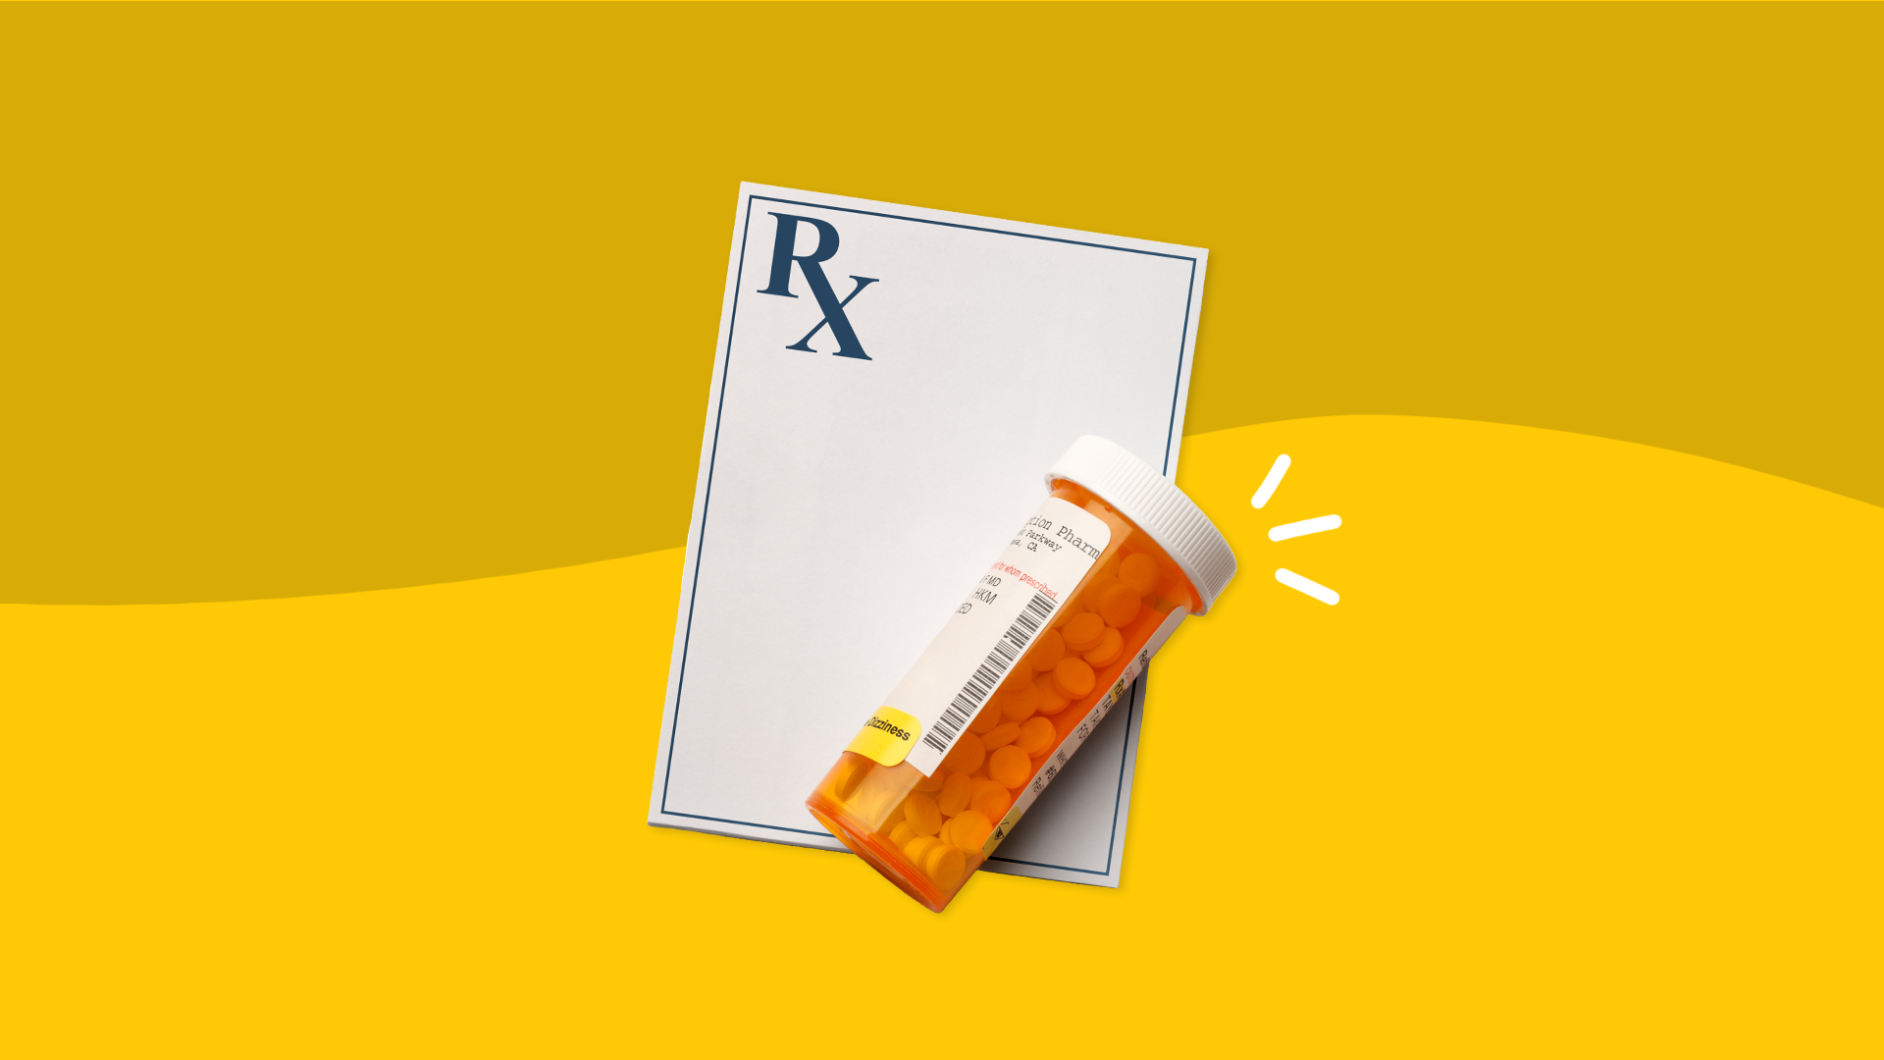 Prescription pad with bottle: Colchicine side effects